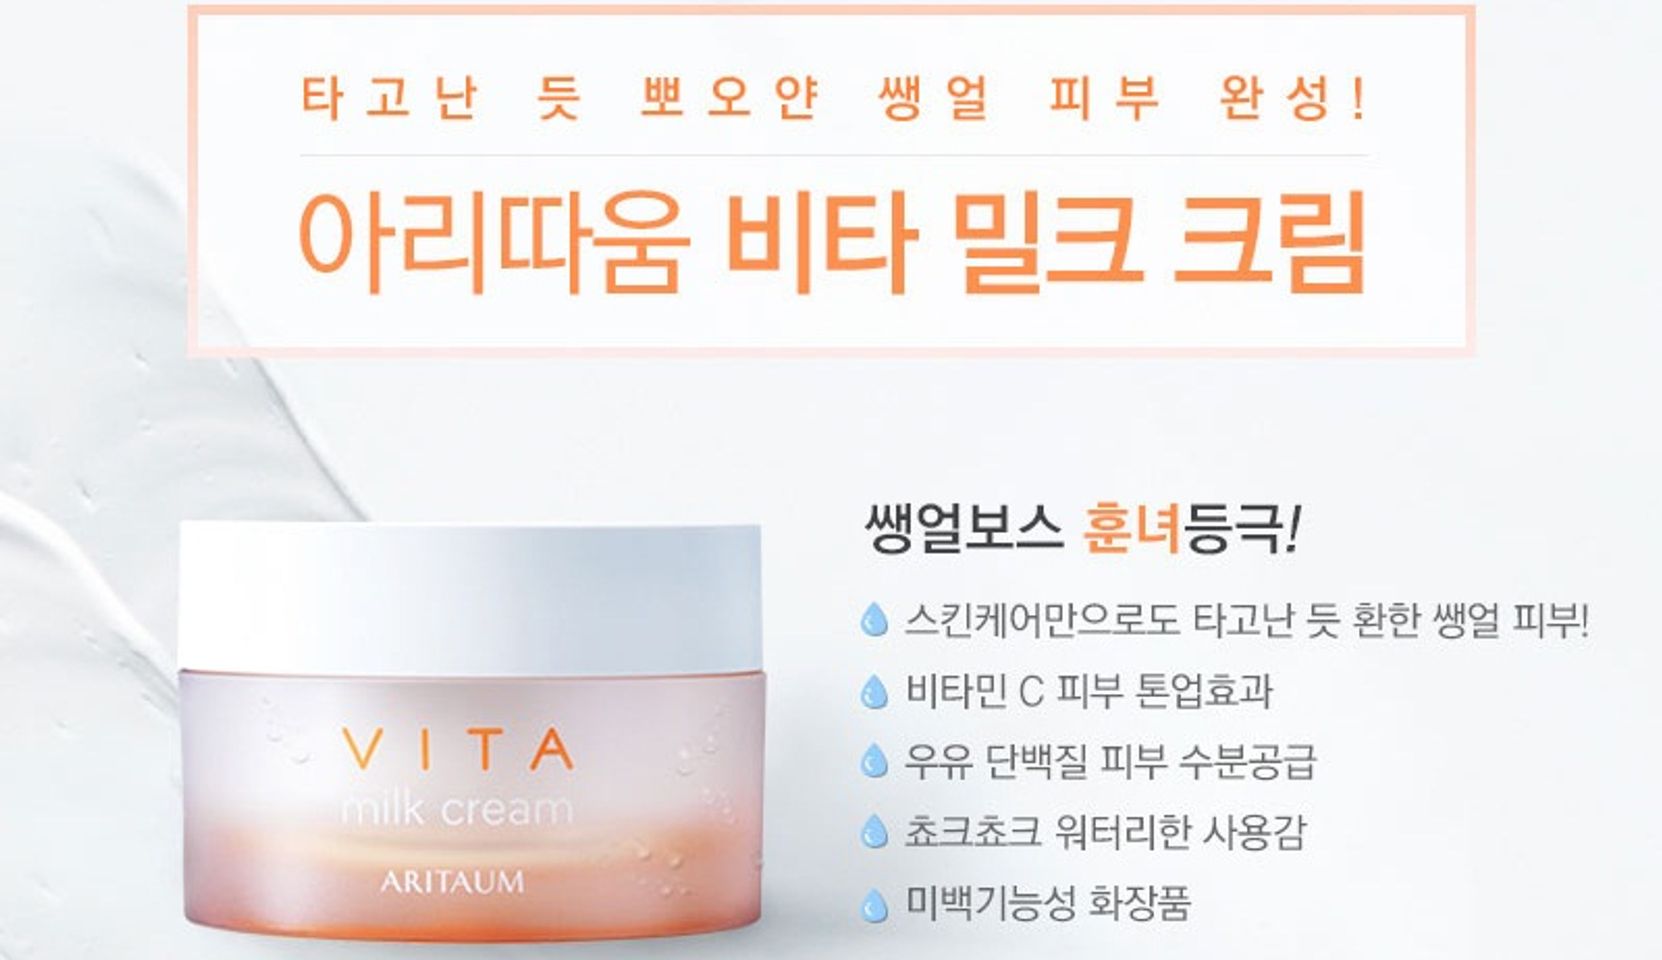 Kem dưỡng trắng da Aritaum Vita Milk Cream Brightening Cosmetic chứa thành phần Vitamin C làm sáng da